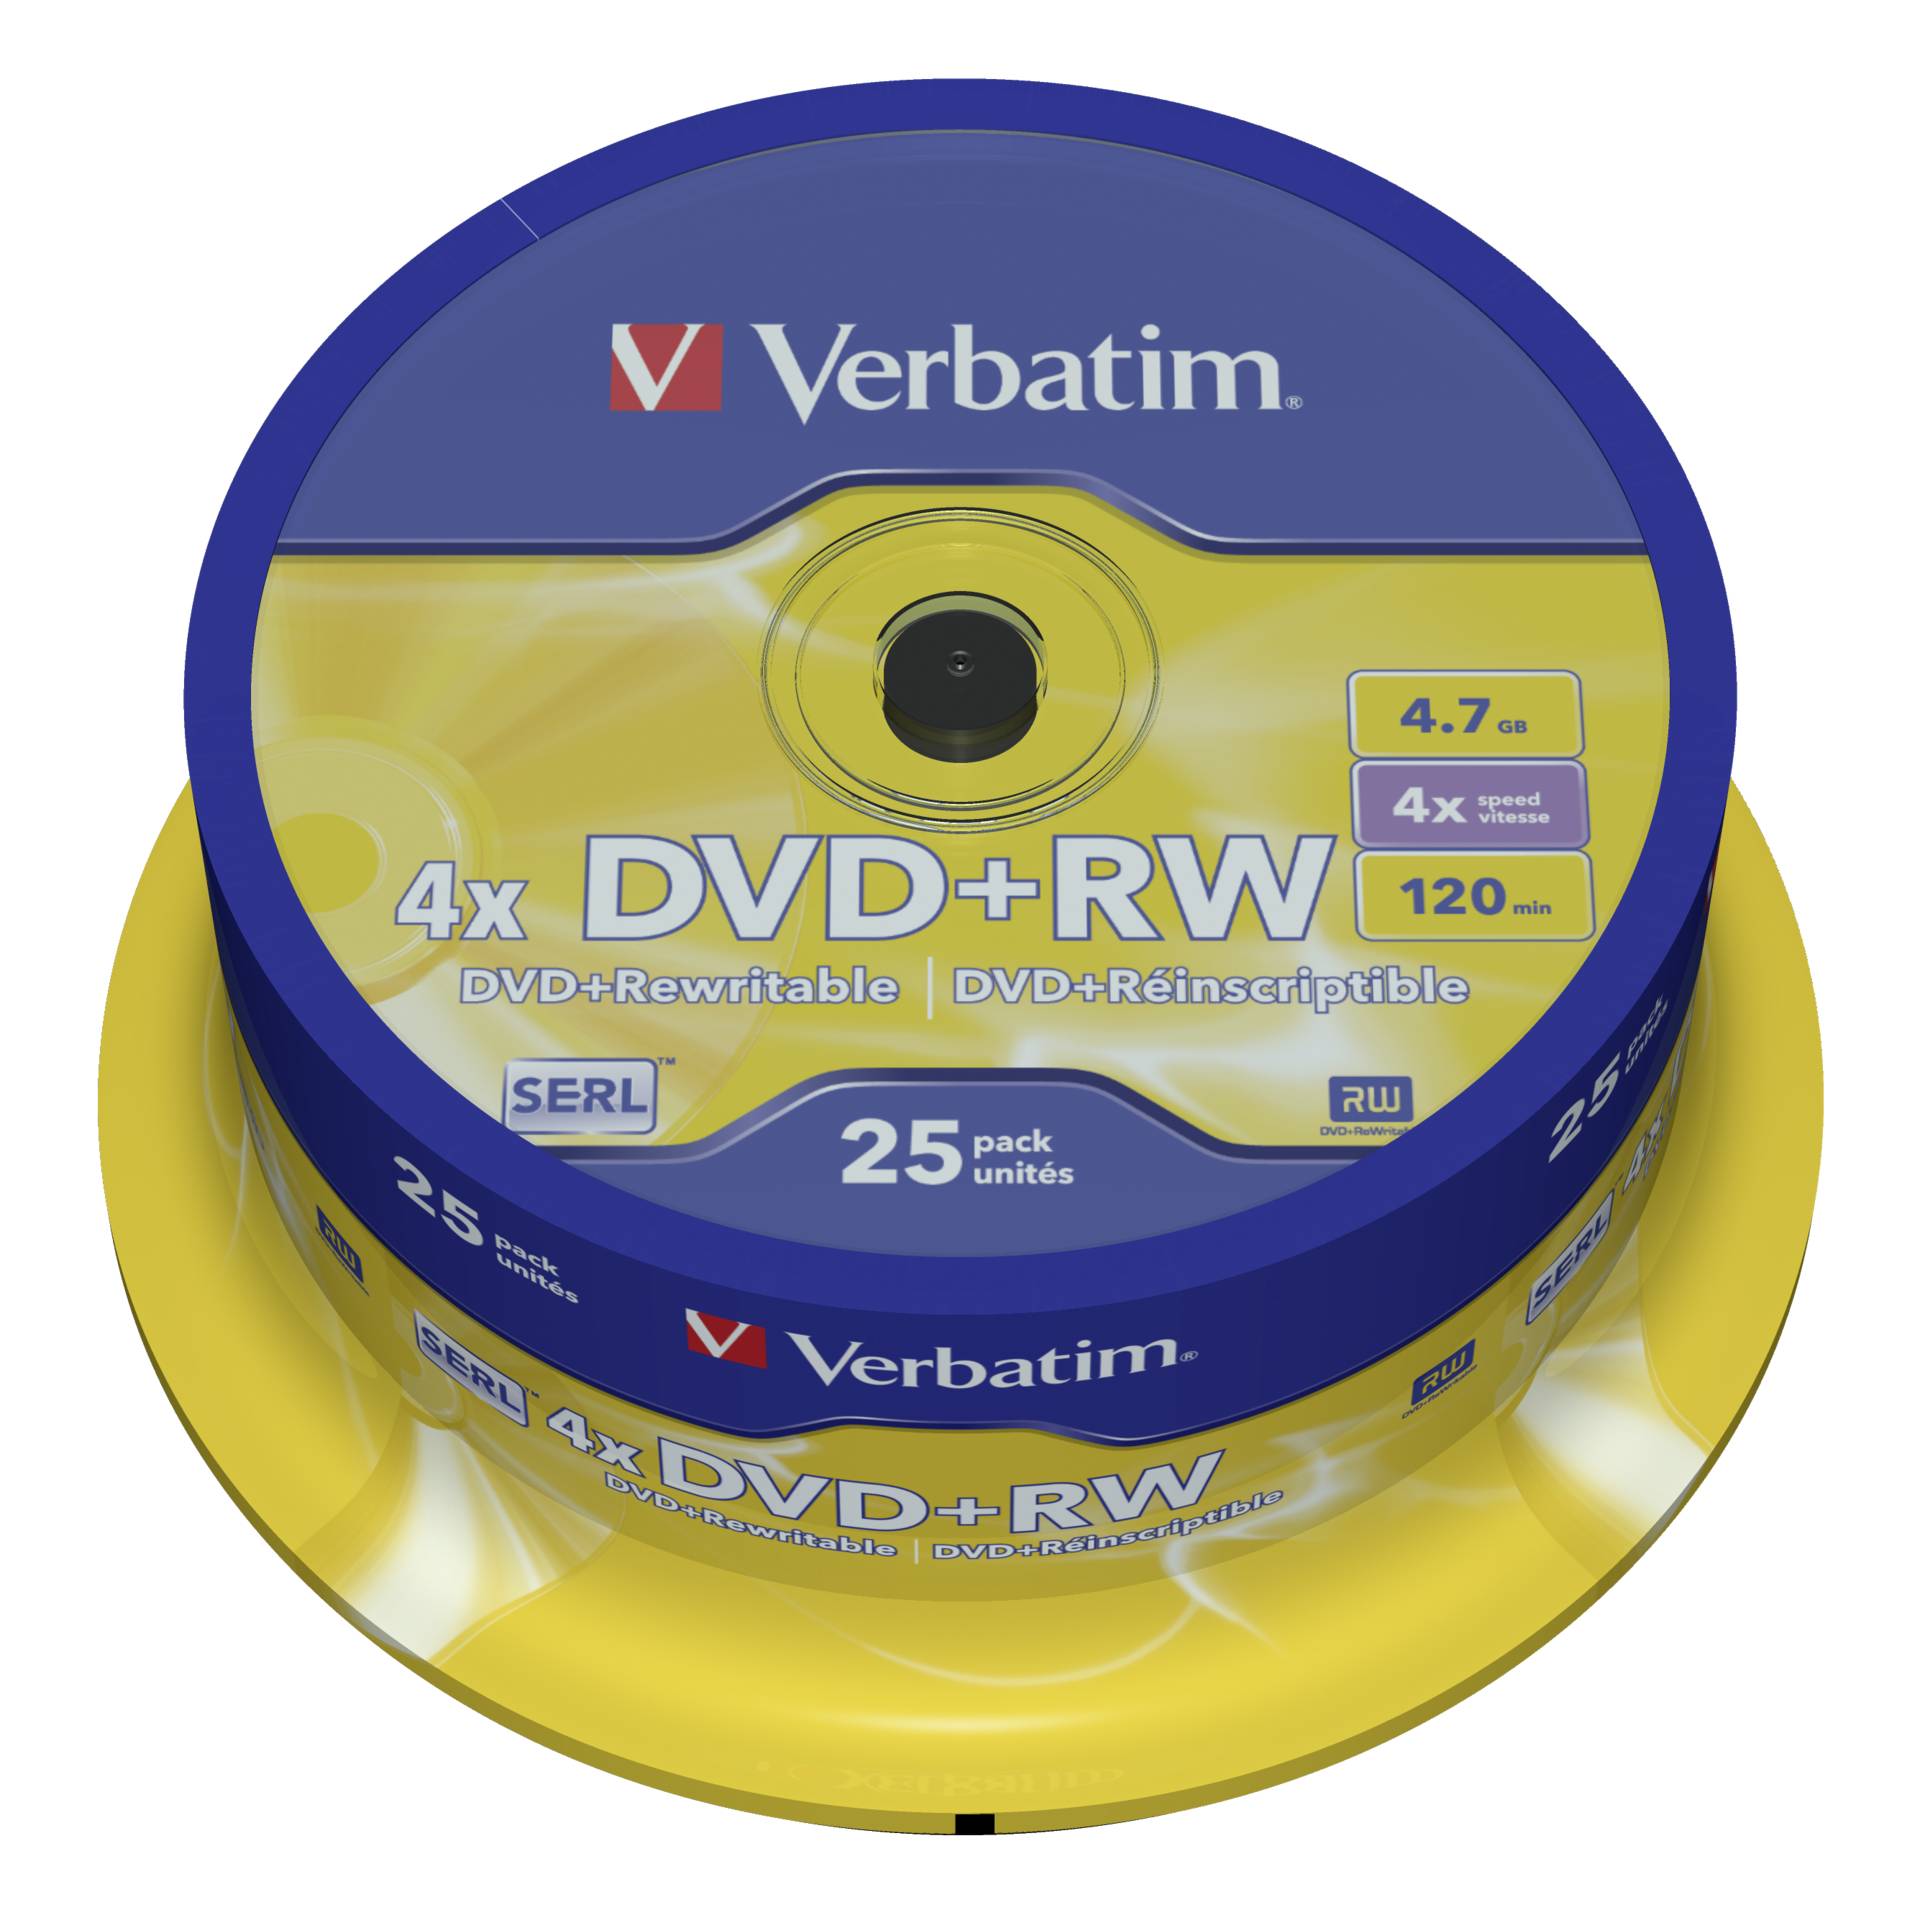 1x25 Verbatim DVD+RW 4,7GB 4x Speed, opaco argento